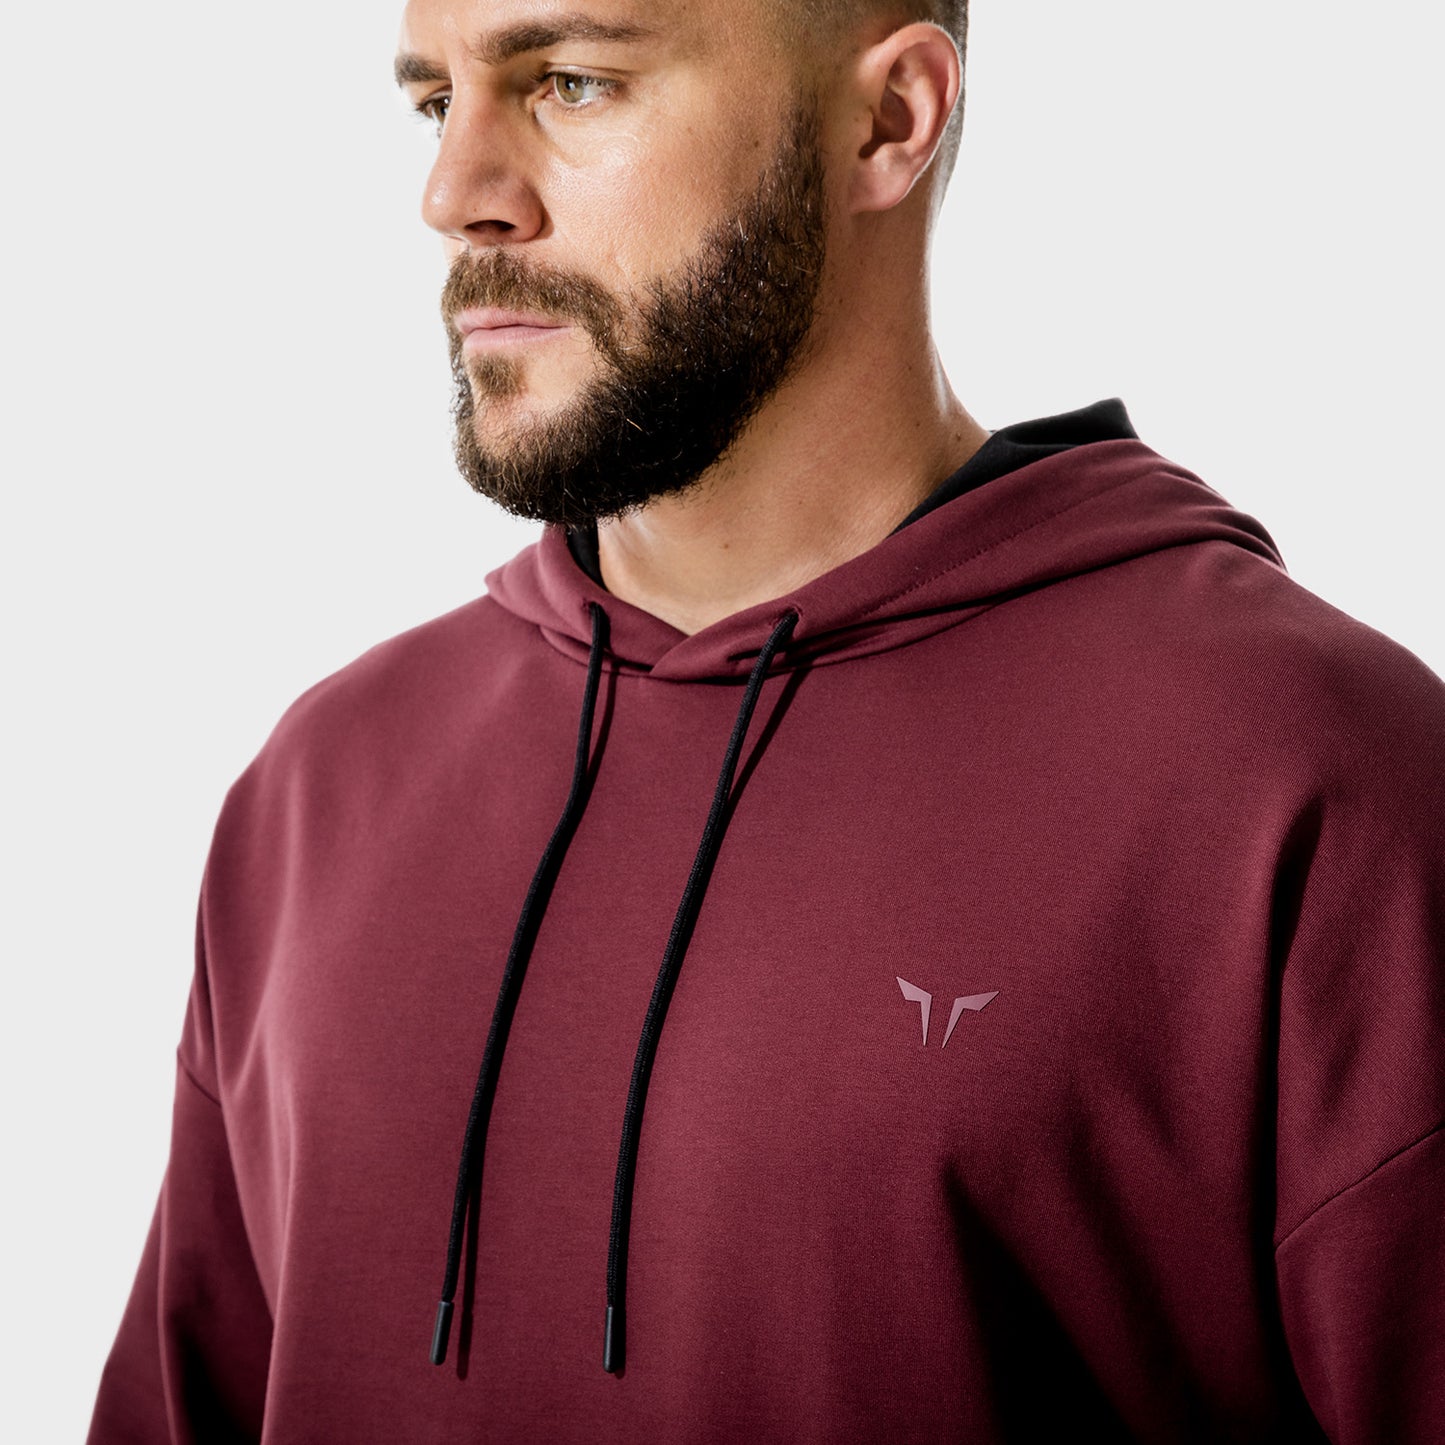 squatwolf-gym-wear-lab-360-hoodie-maroon-workout-hoodies-for-men